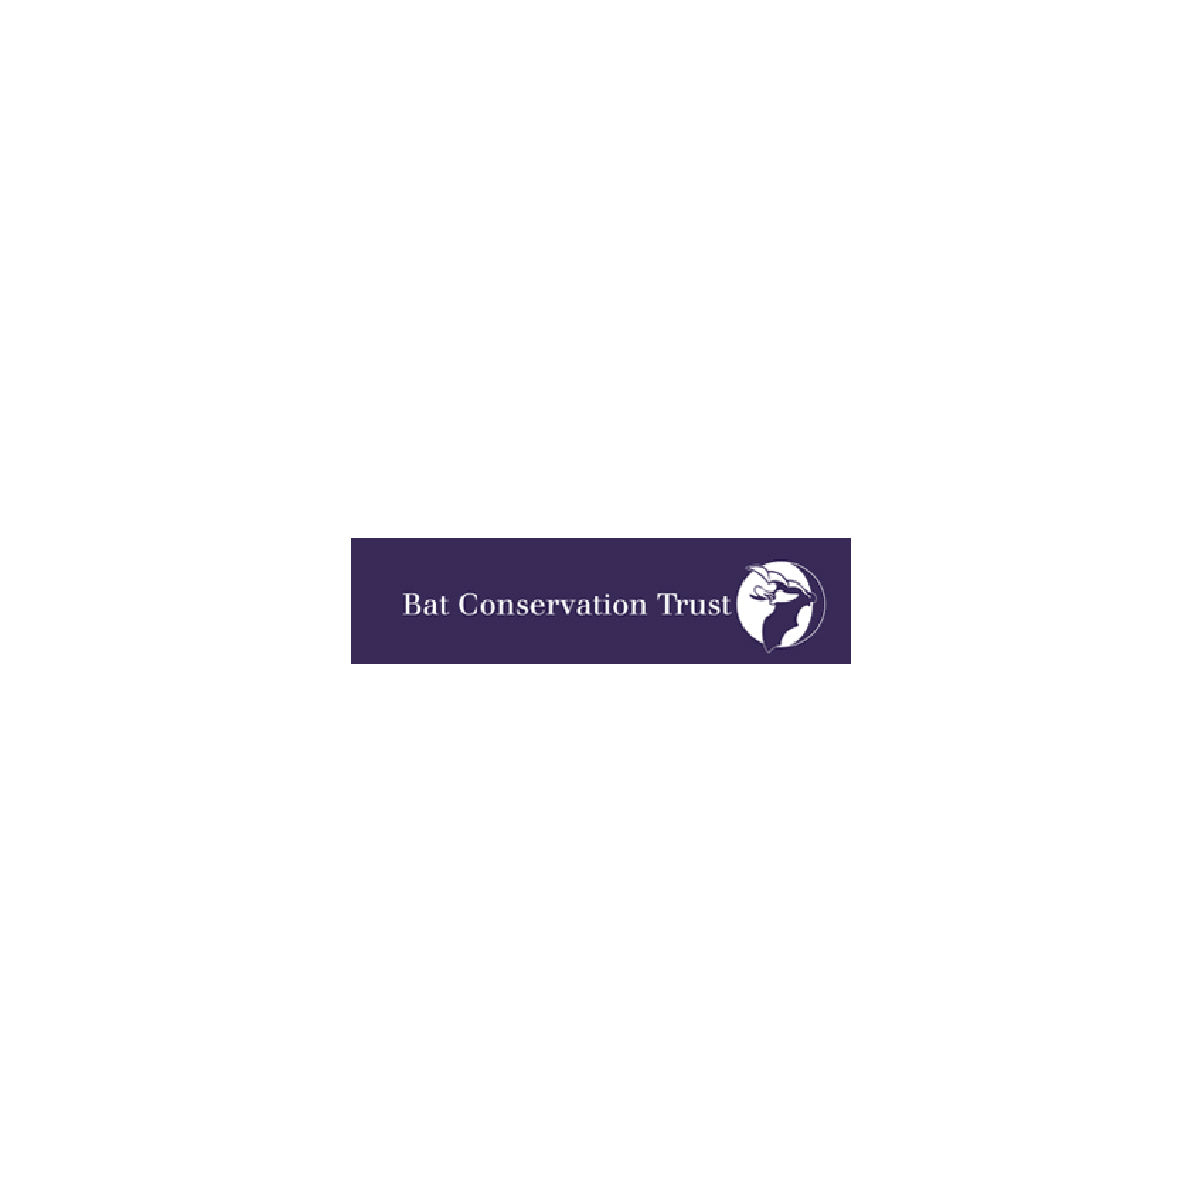 Bat conservation trust logo